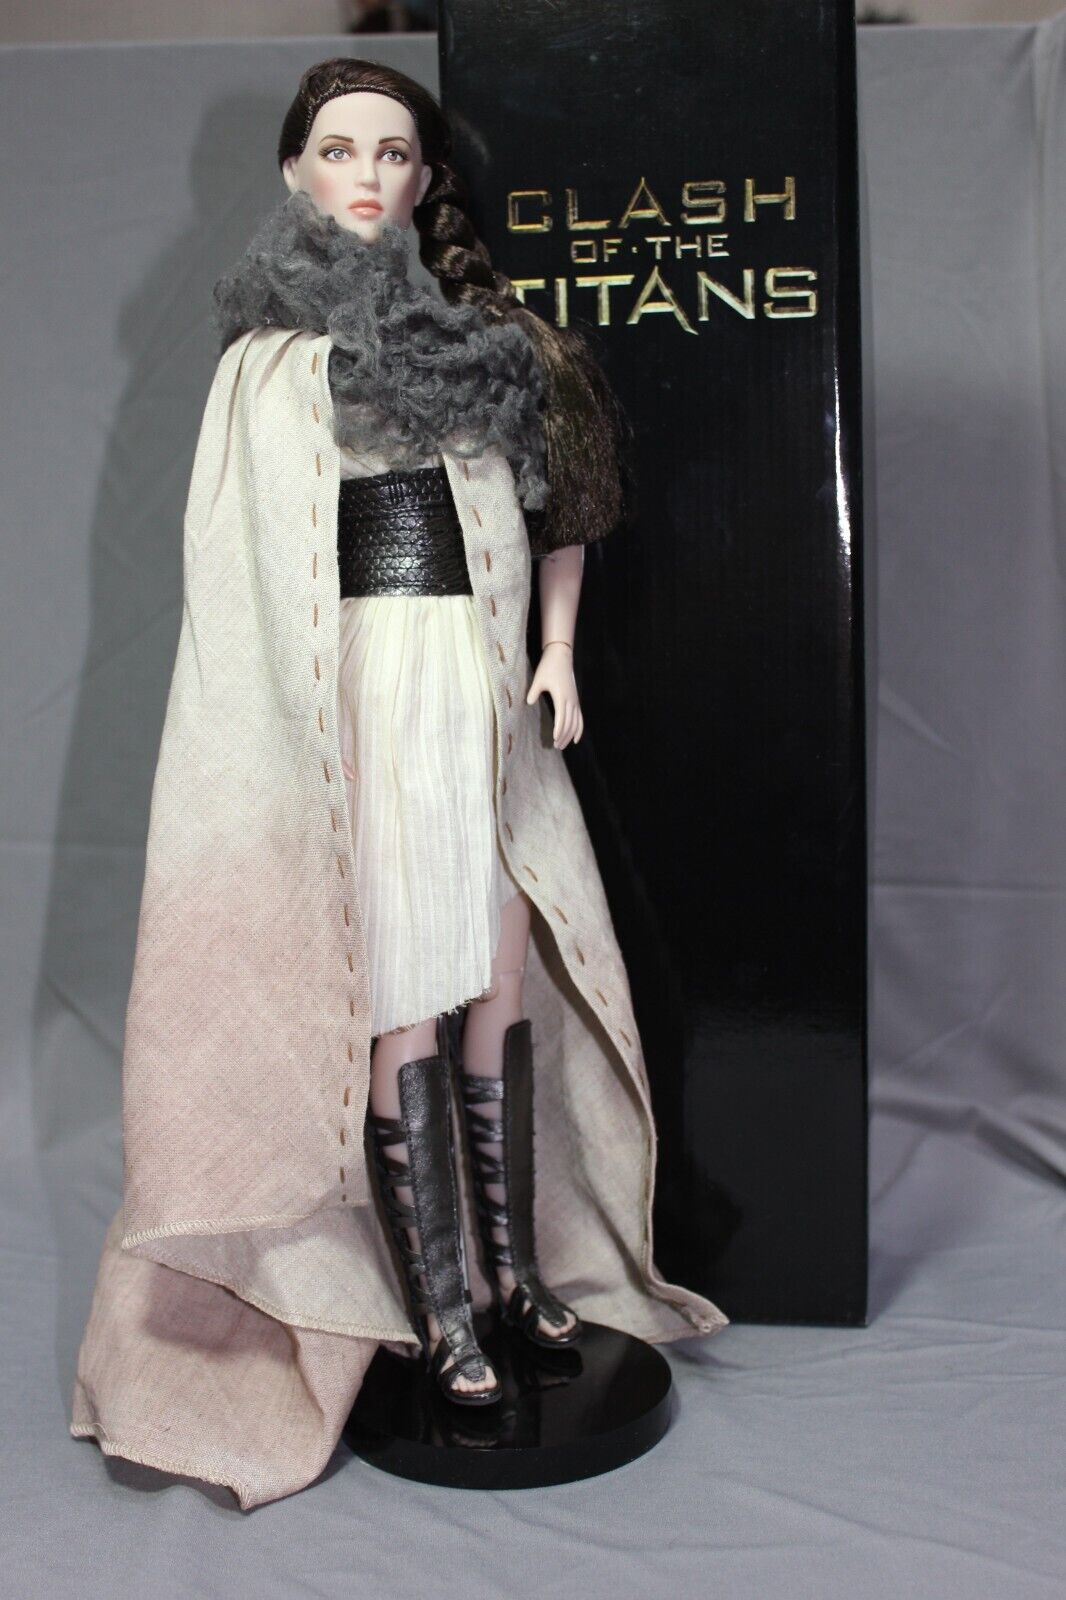 Tonner Doll, IO - 2011 Clash of The Titans, 16